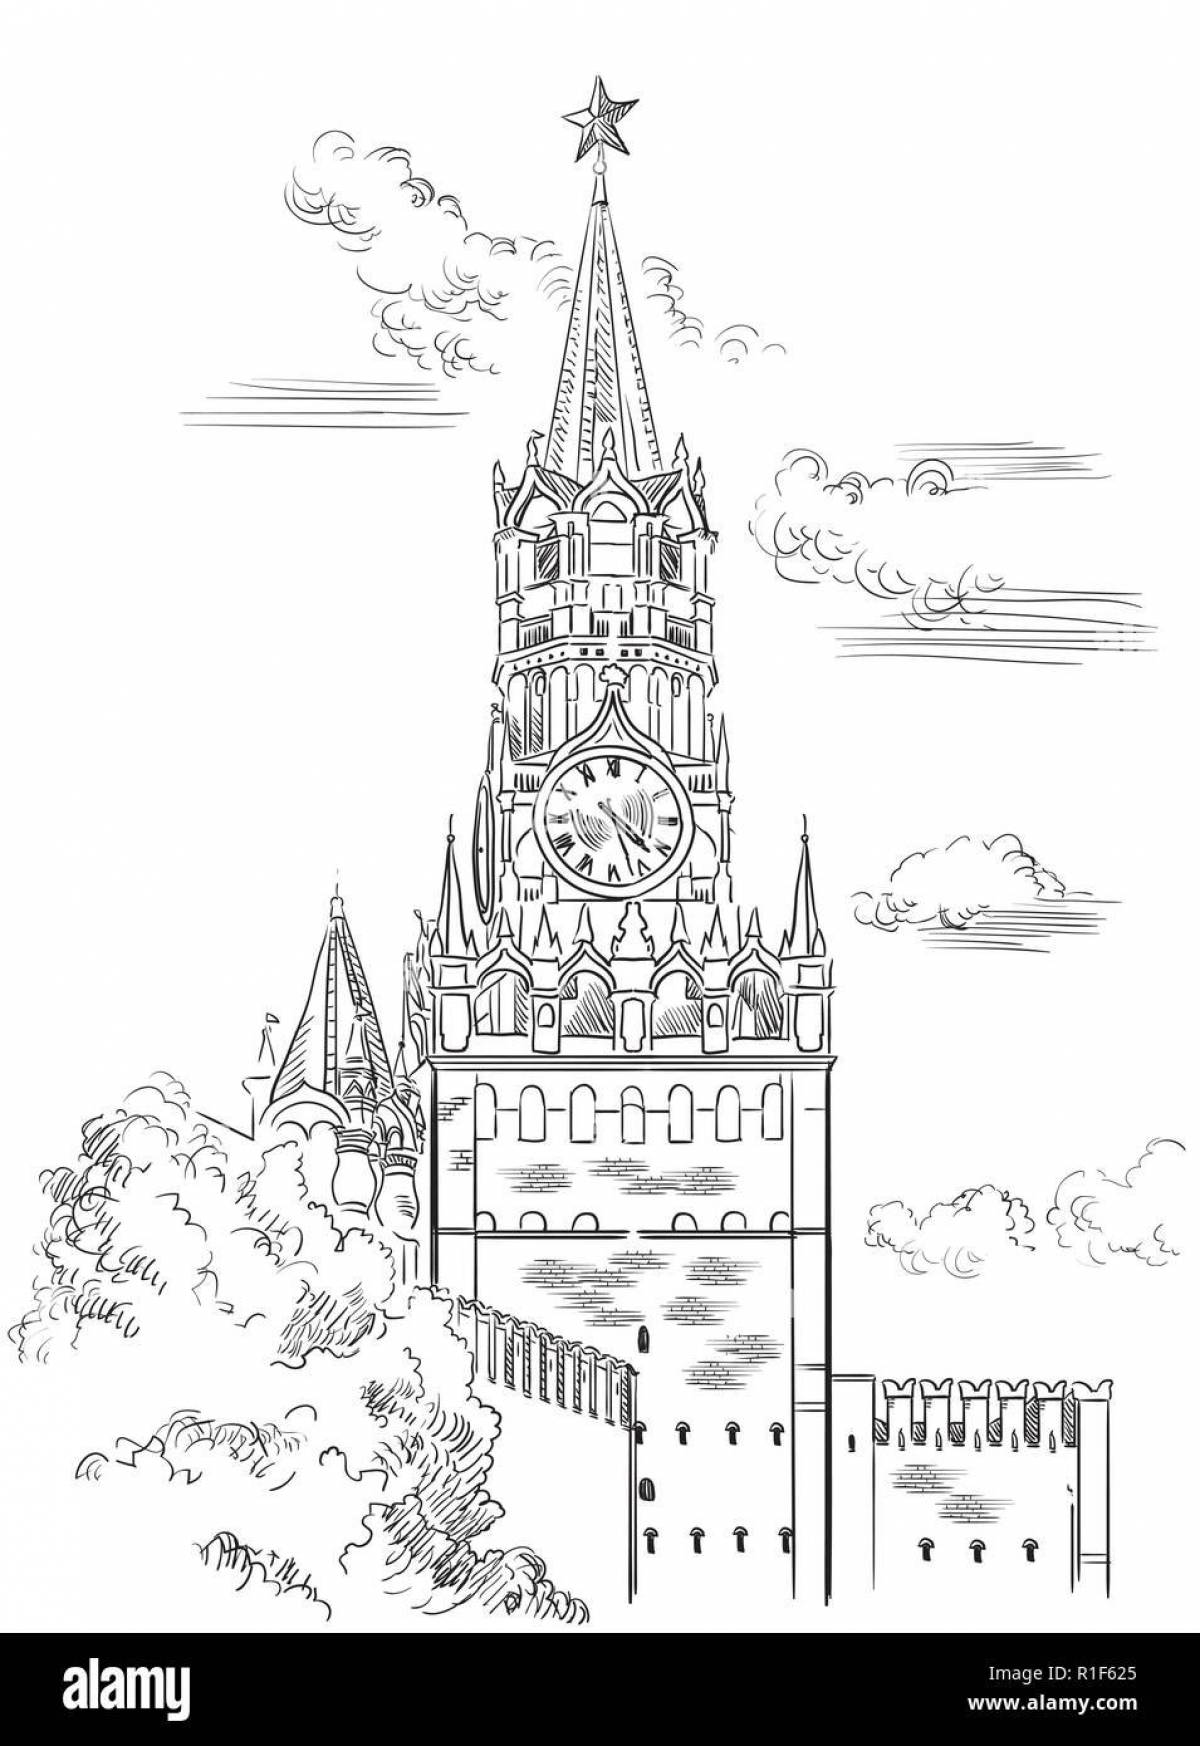 Fancy Kremlin drawing coloring page